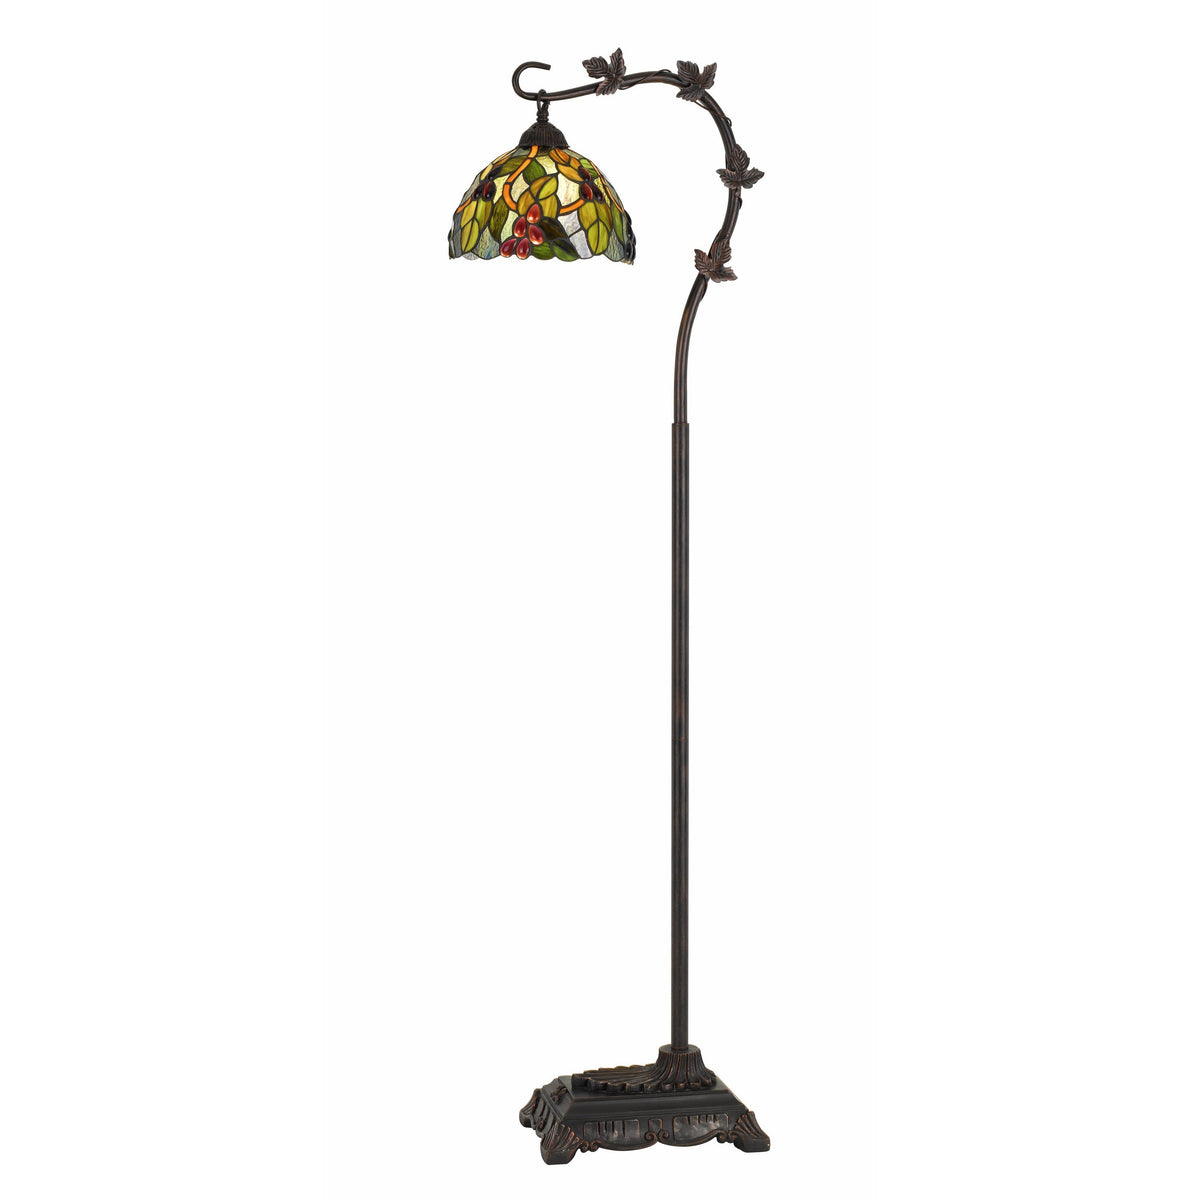 Downbridge Metal Tiffany Floor Lamp with Leaf Accents, Multicolor - BM224936